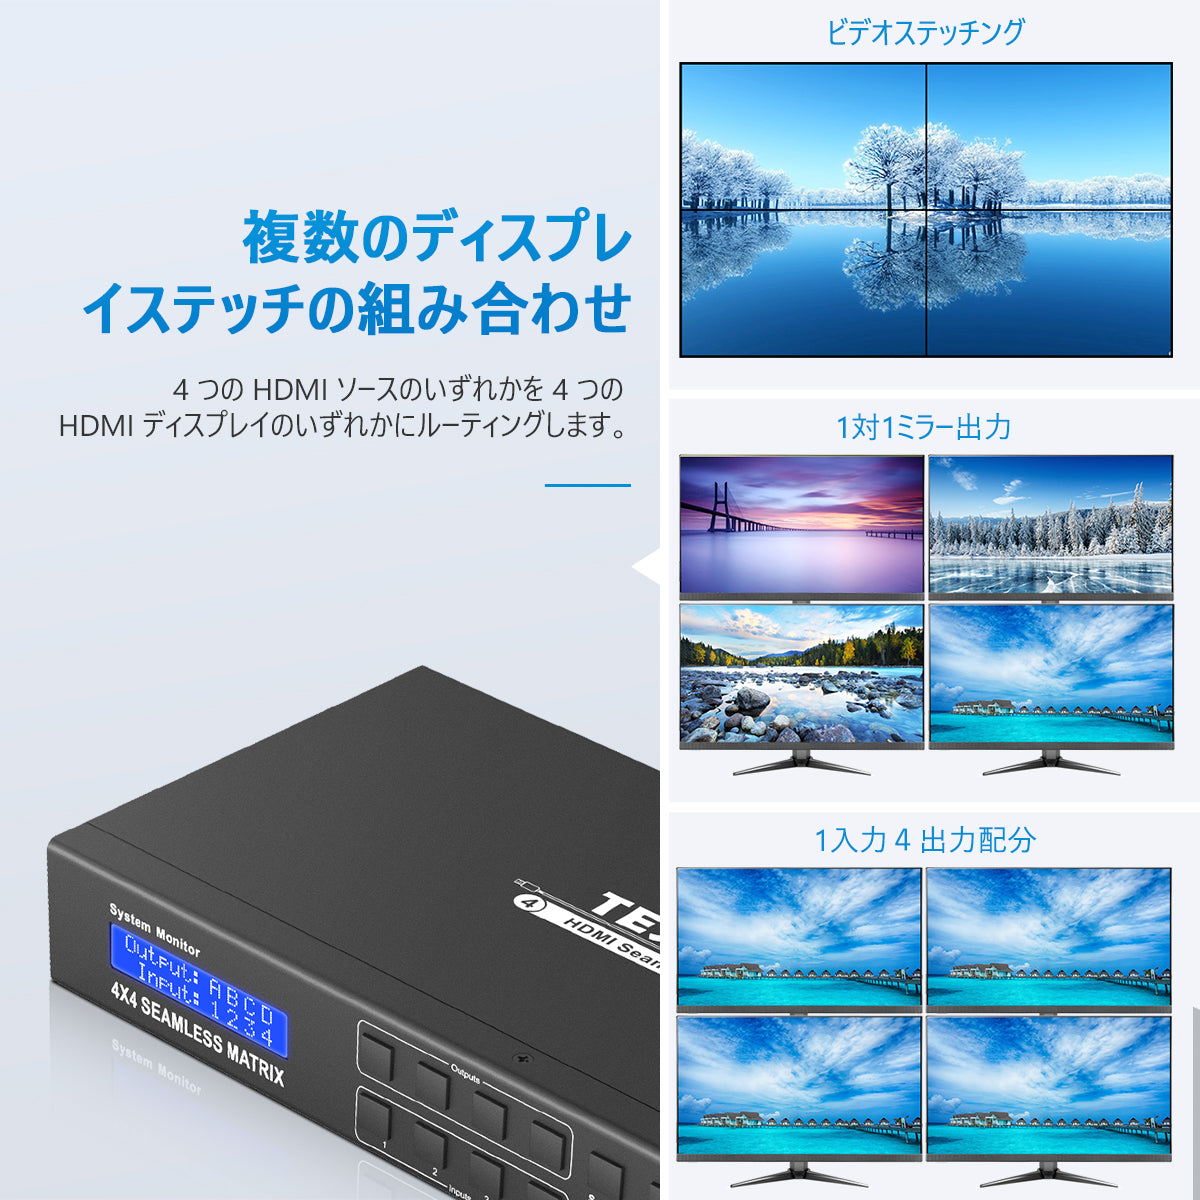 4x4 4K HDMI マトリックス スイッチ ビデオ ウォールとシームレスなスイッチング